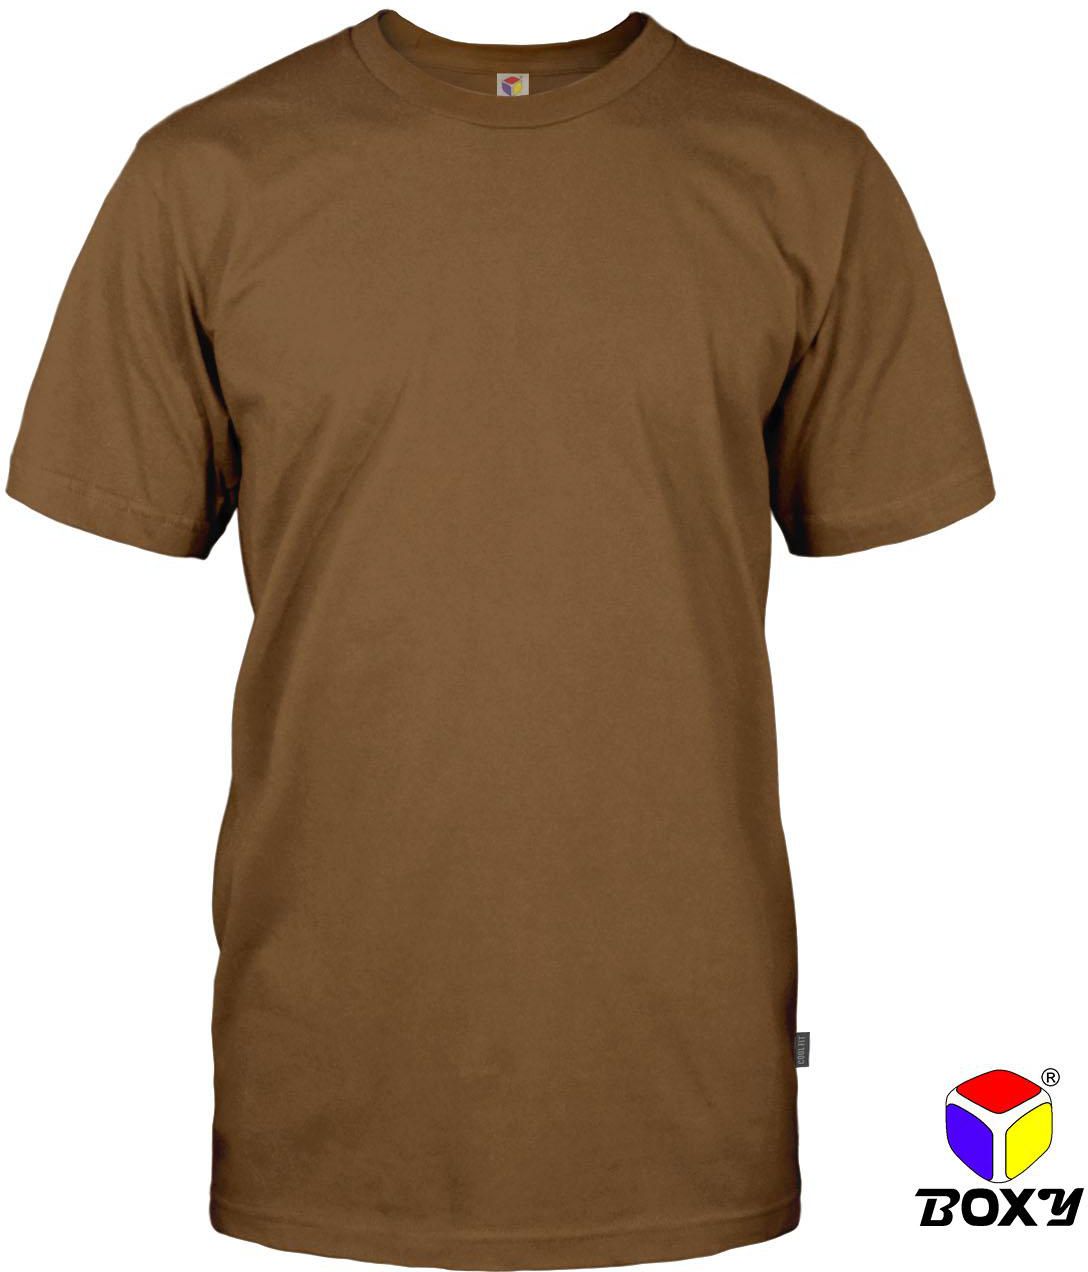 Boxy Microfiber Round Neck Plain T-shirt - 7 Sizes (Brown)